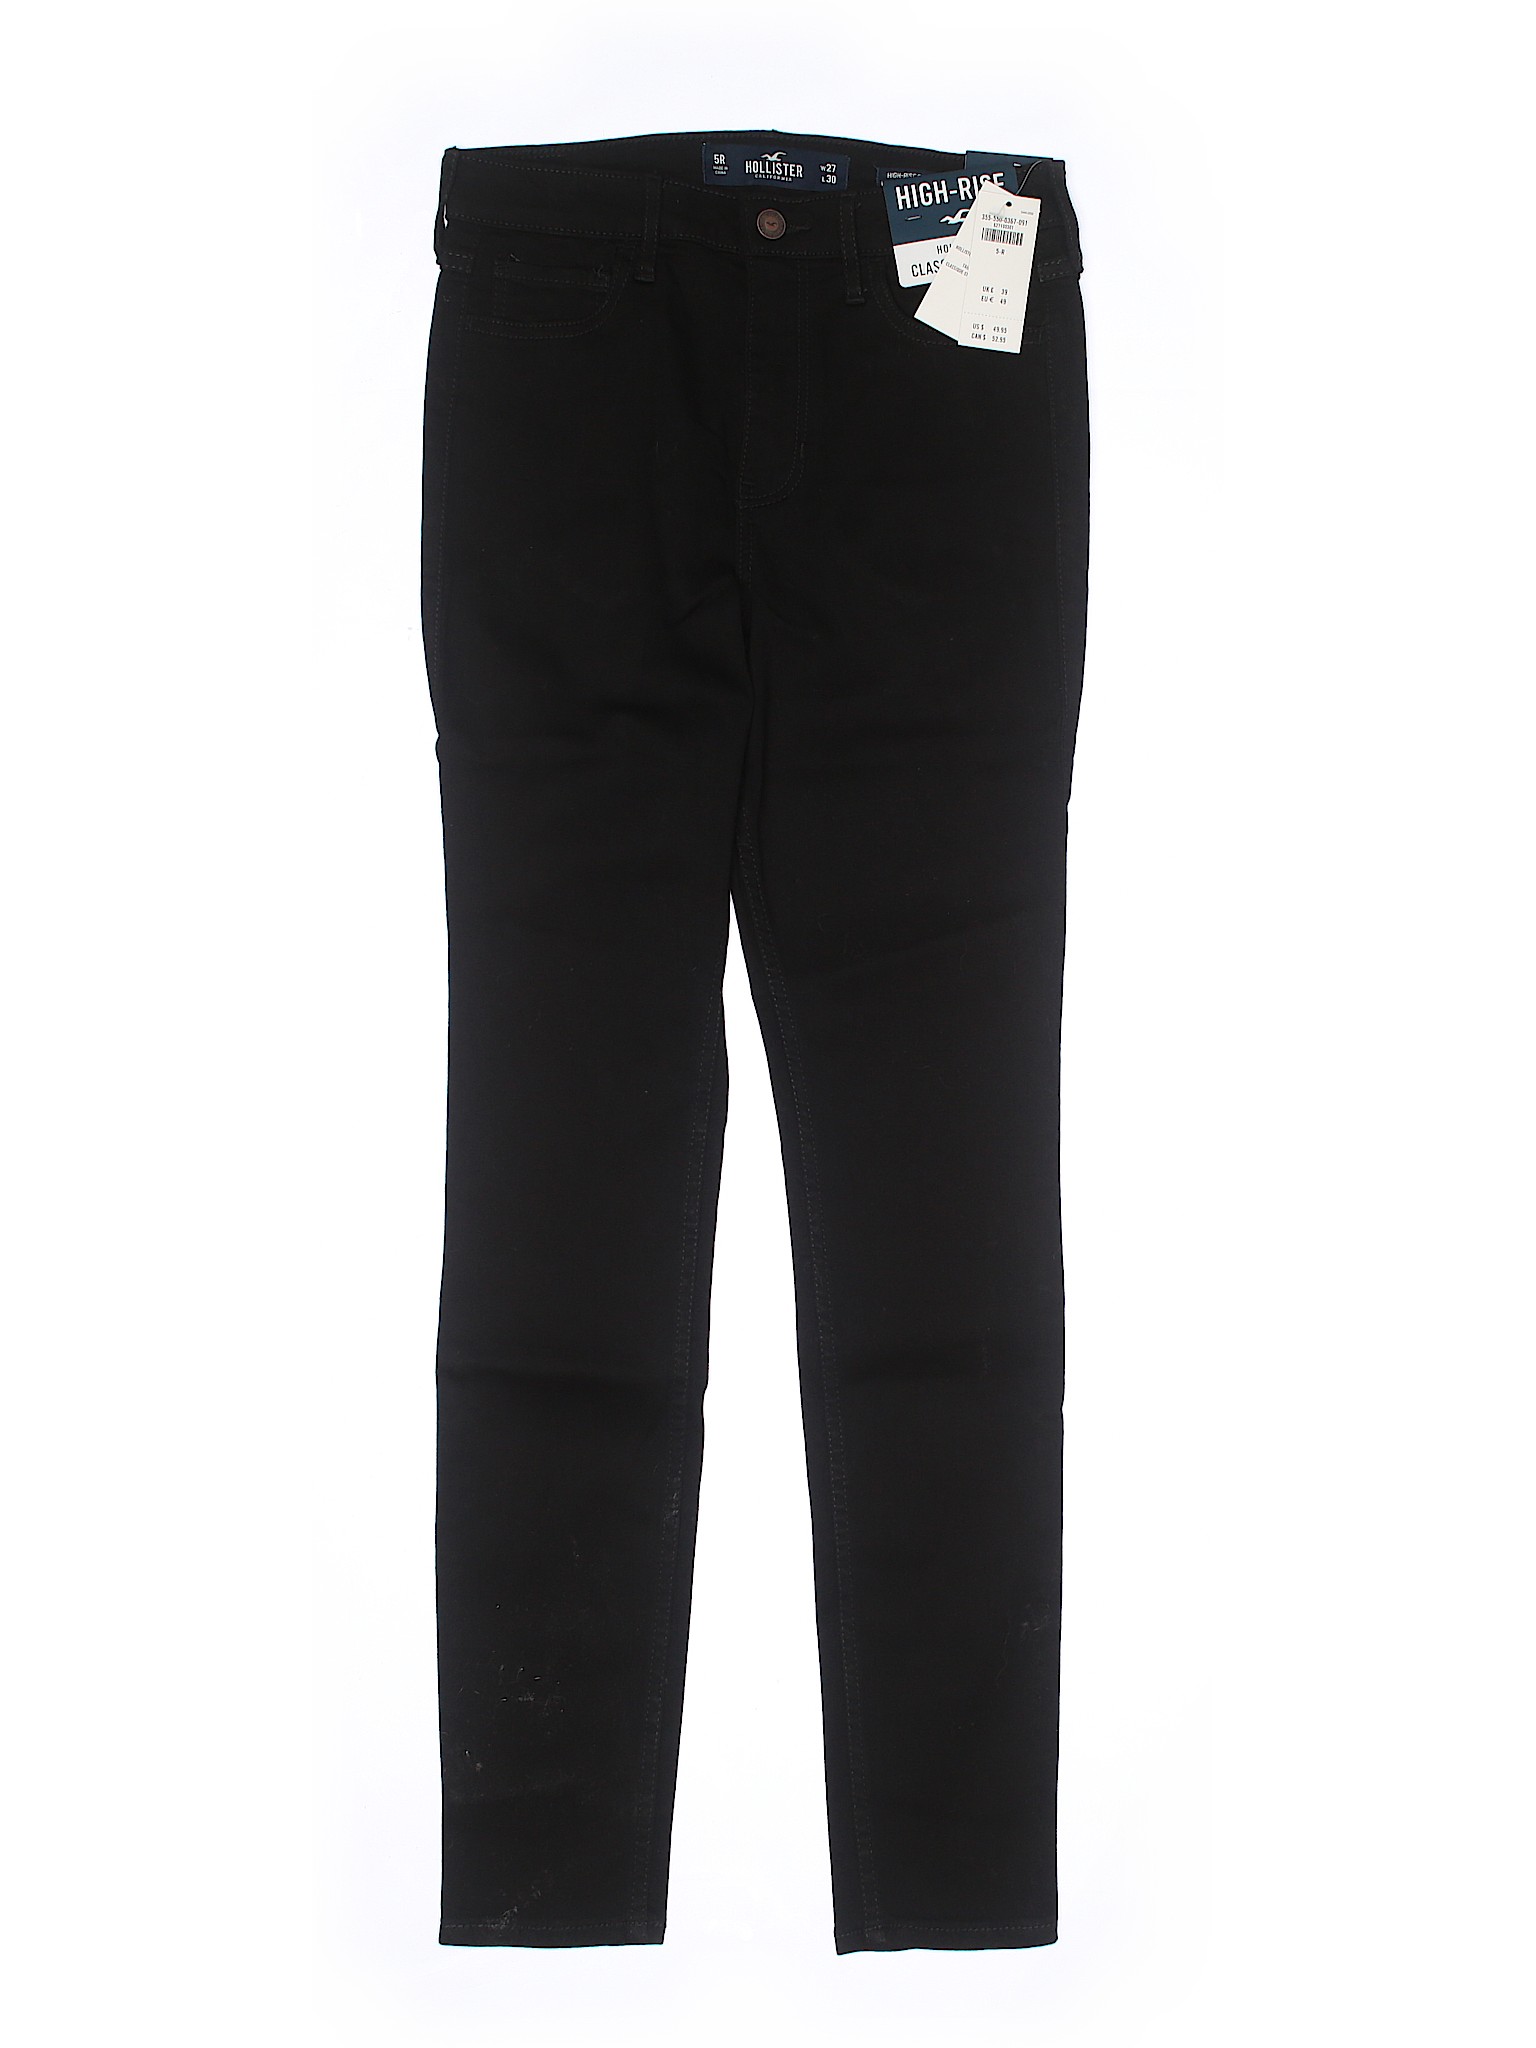 NWT Hollister Women Black Jeans 5 | eBay